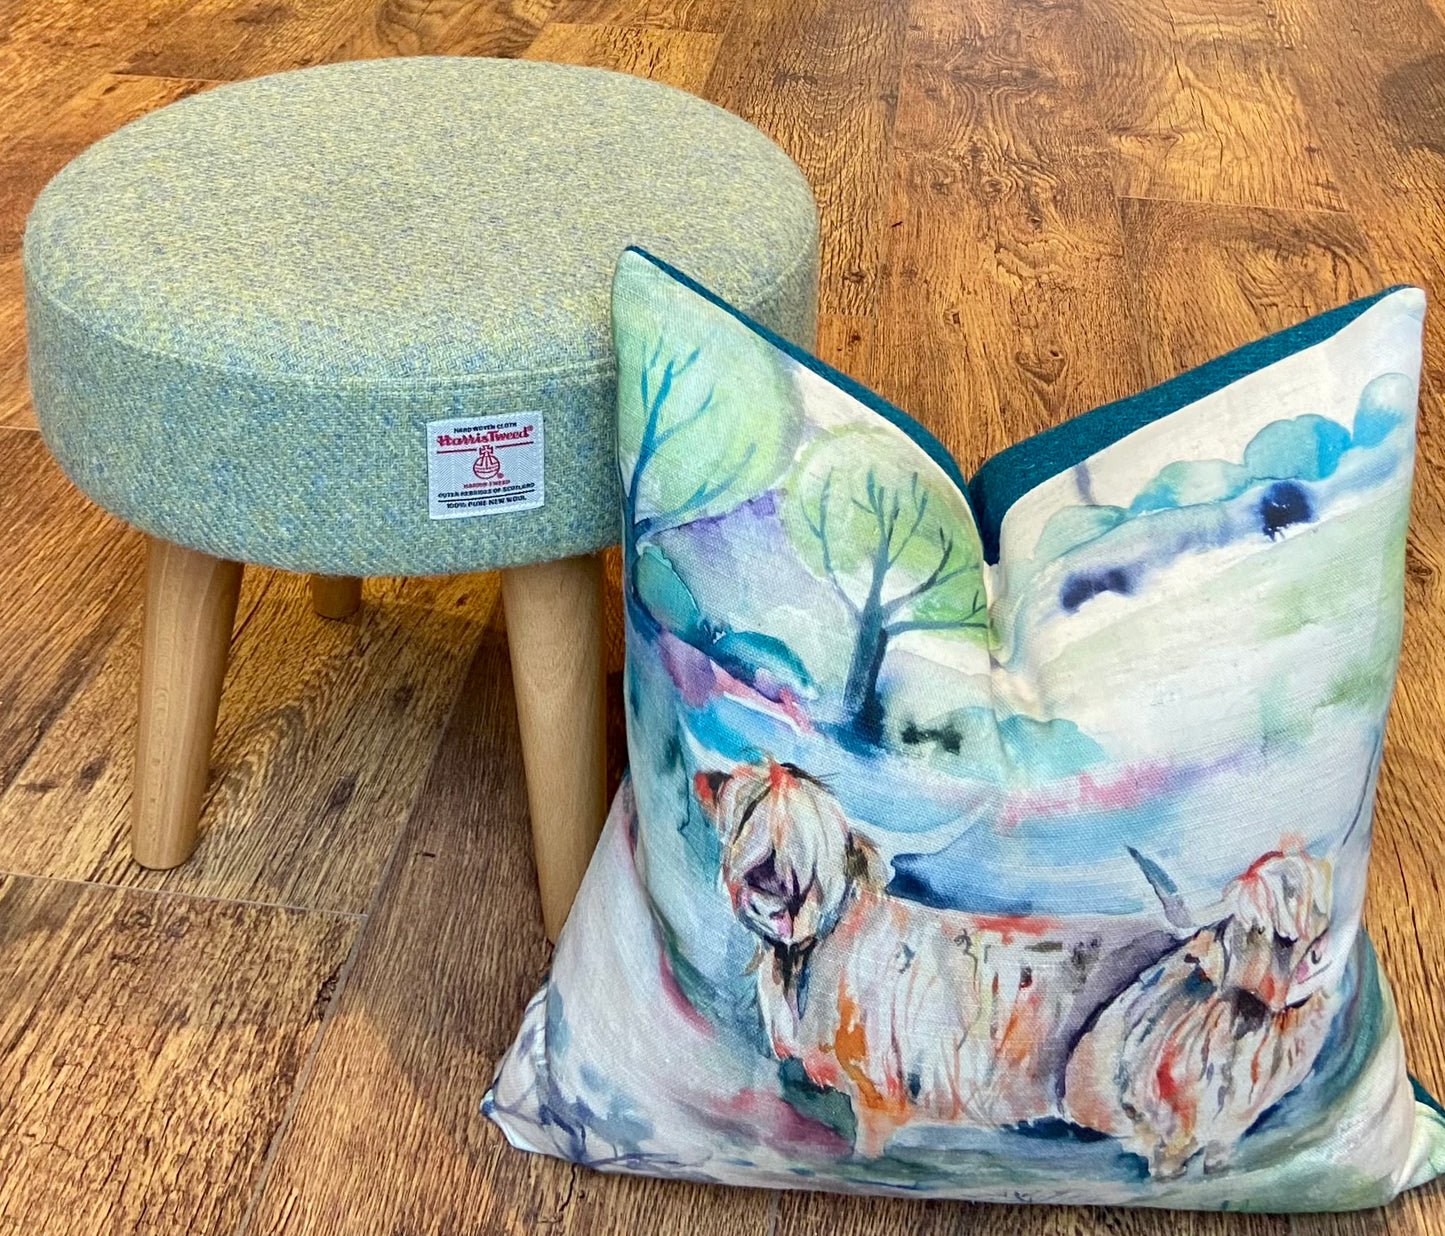 Highland Cow and Teal Harris Tweed Cushion, Handmade, 16”